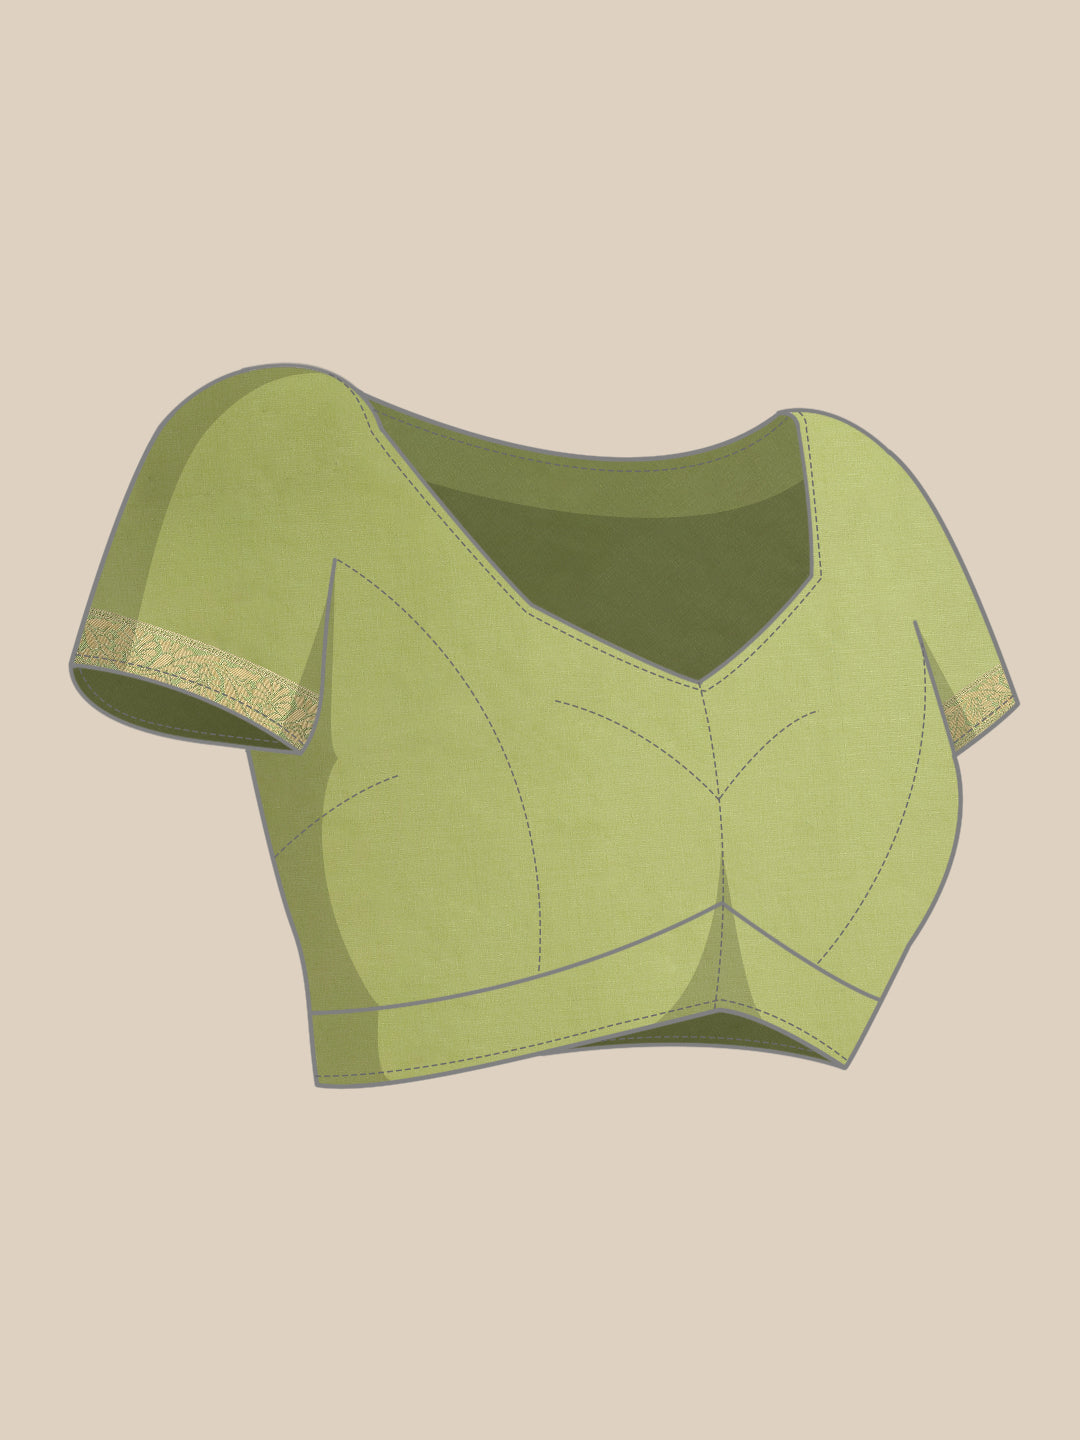 Ishin Women's Silk Blend Teal & Green Woven Design Saree With Blouse Piece